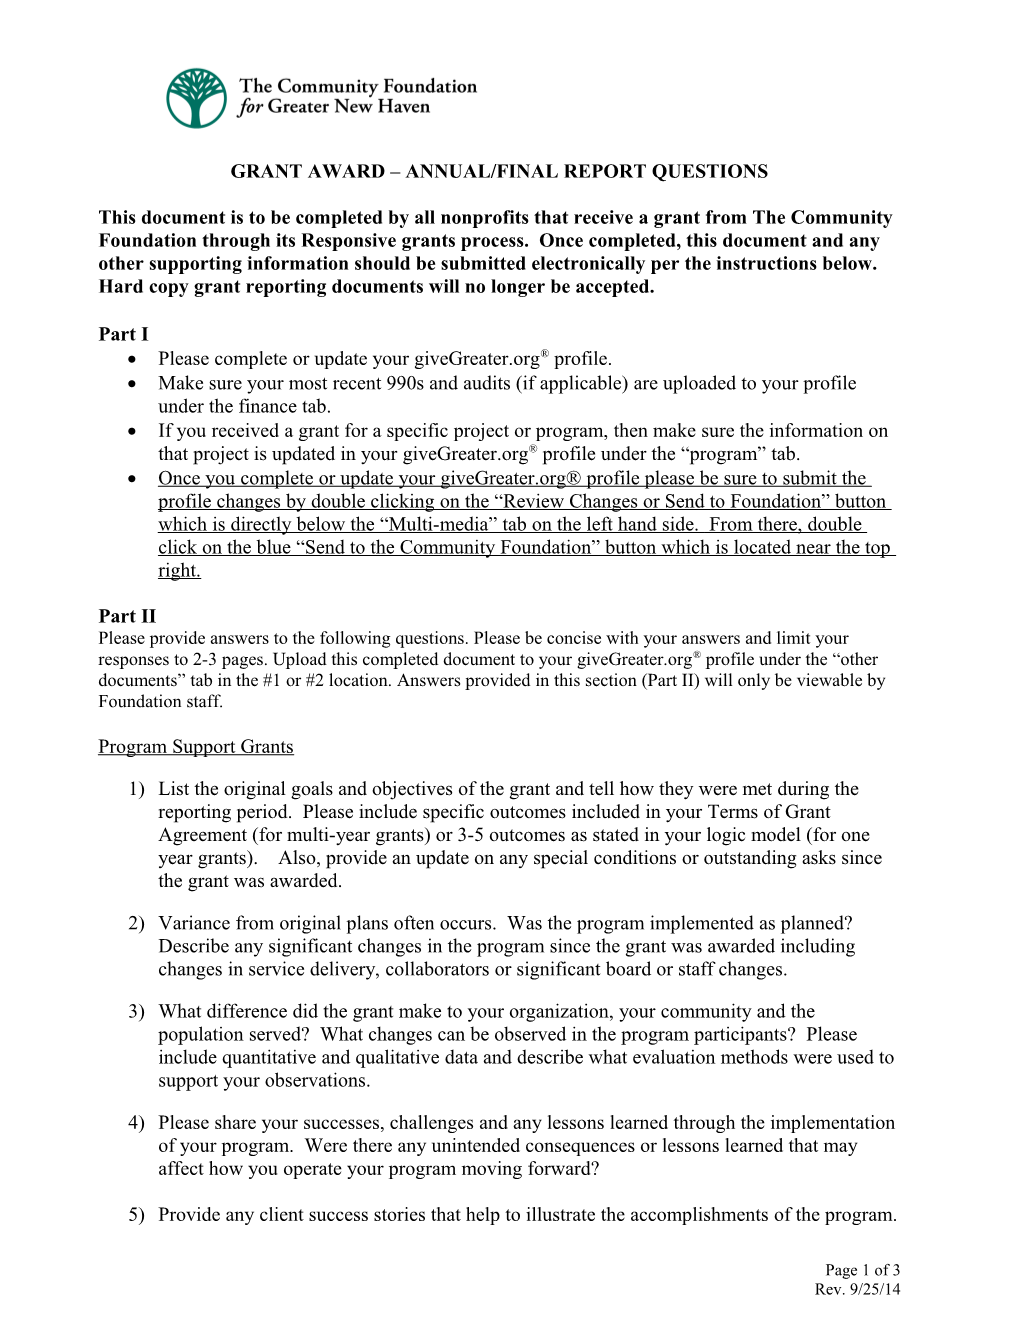 Grant Award Annual/Final Report Questions